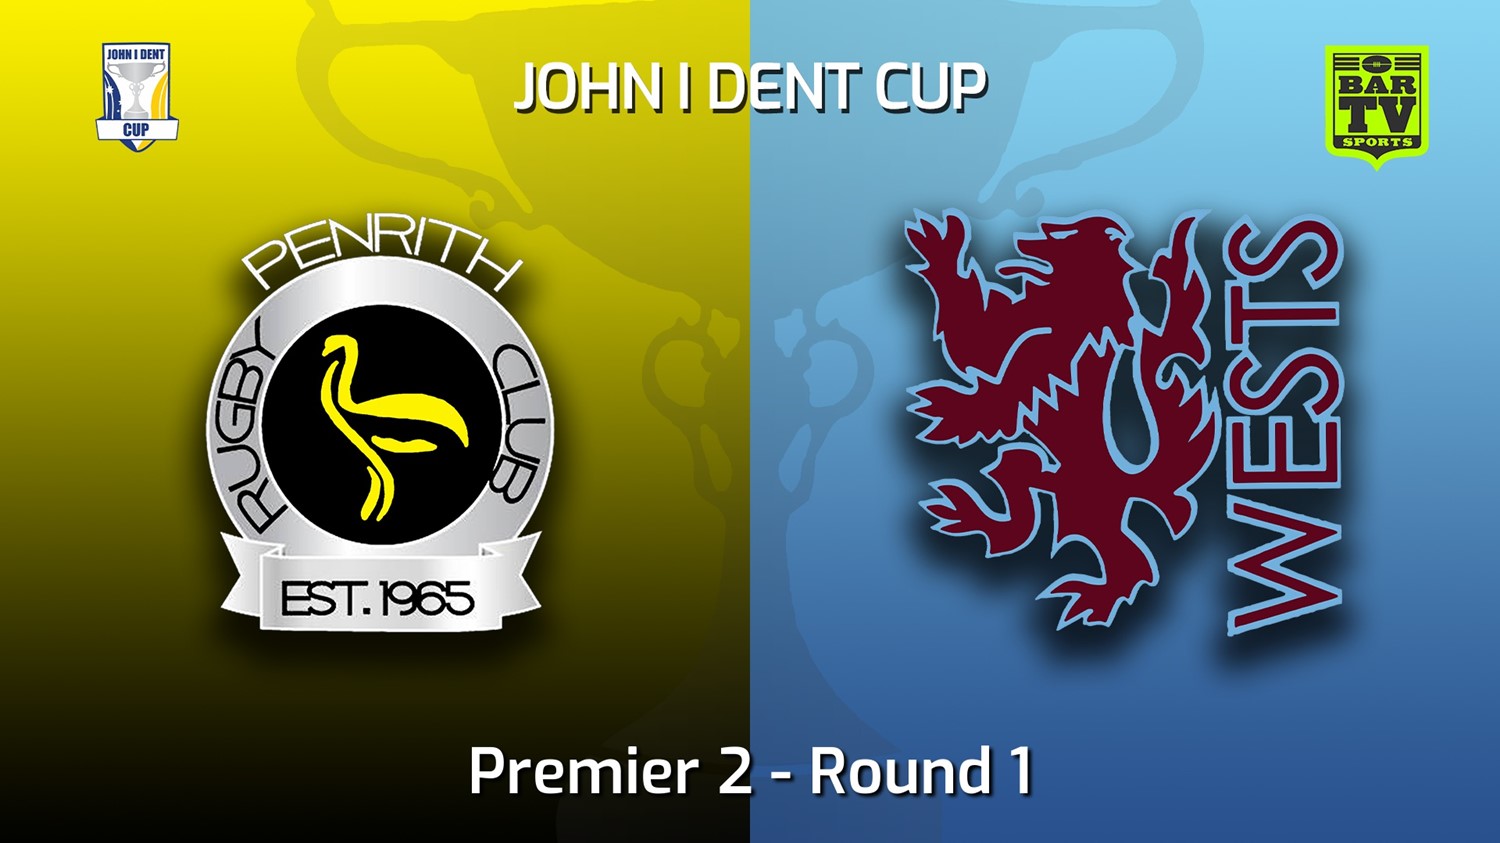 220423-John I Dent (ACT) Round 1 - Premier 2 - Penrith Emus v Wests Lions Slate Image